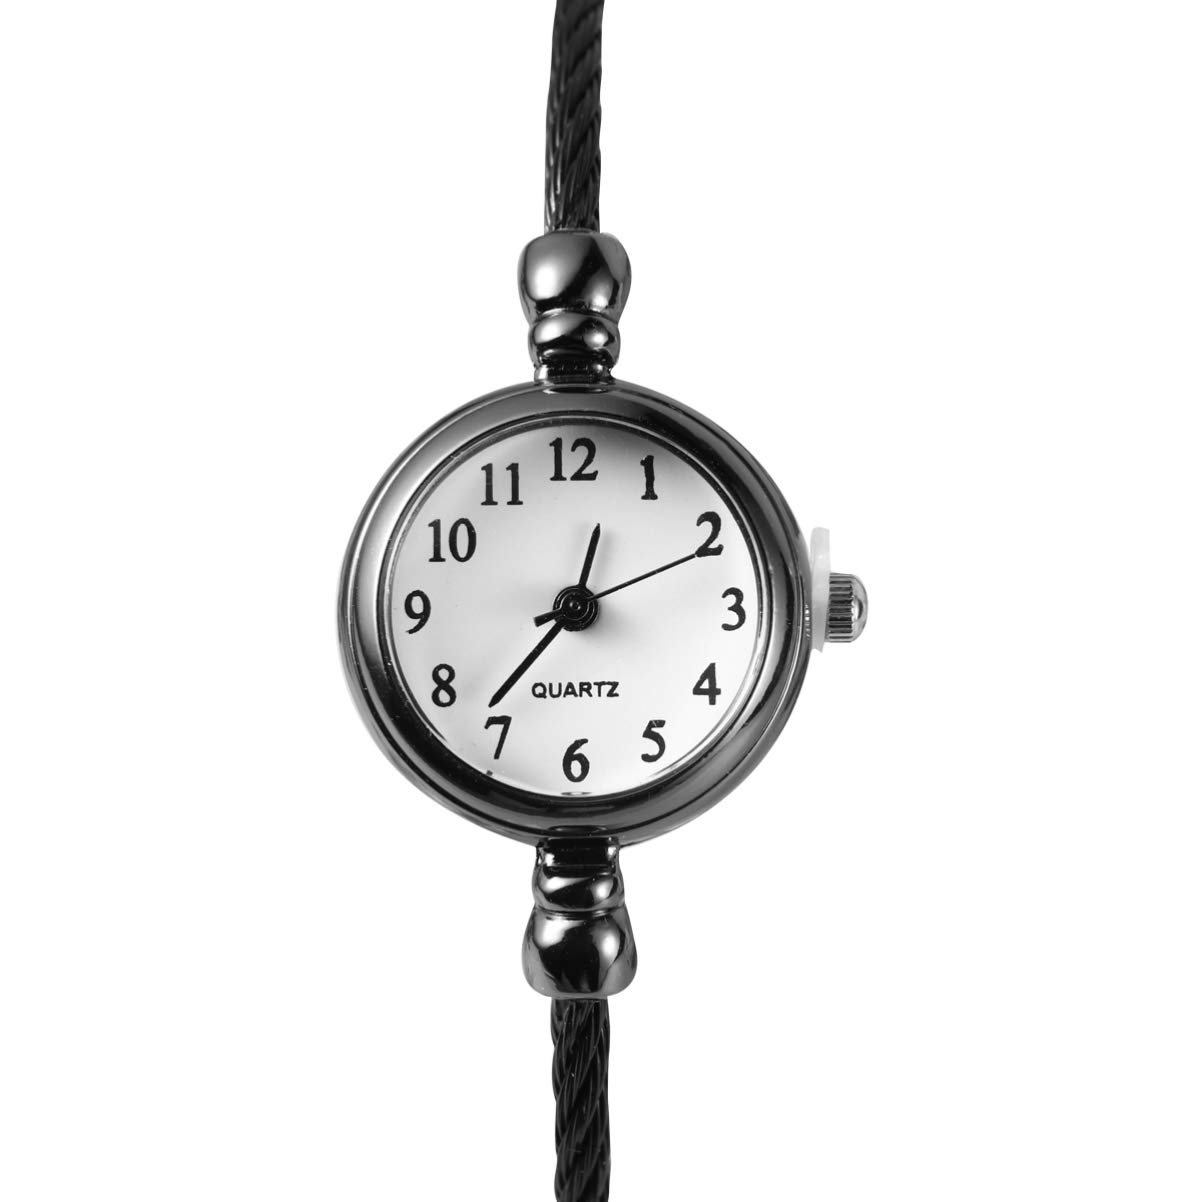 NICERIO Digitale Armbanduhr für Damen – Quarz-Armreif, Manschette, Armbanduhr, Edelstahl-Drahtband, Kleideruhren für Damen und Damen, Digitaluhr, Bild 6, 20*2.4cm, Digital